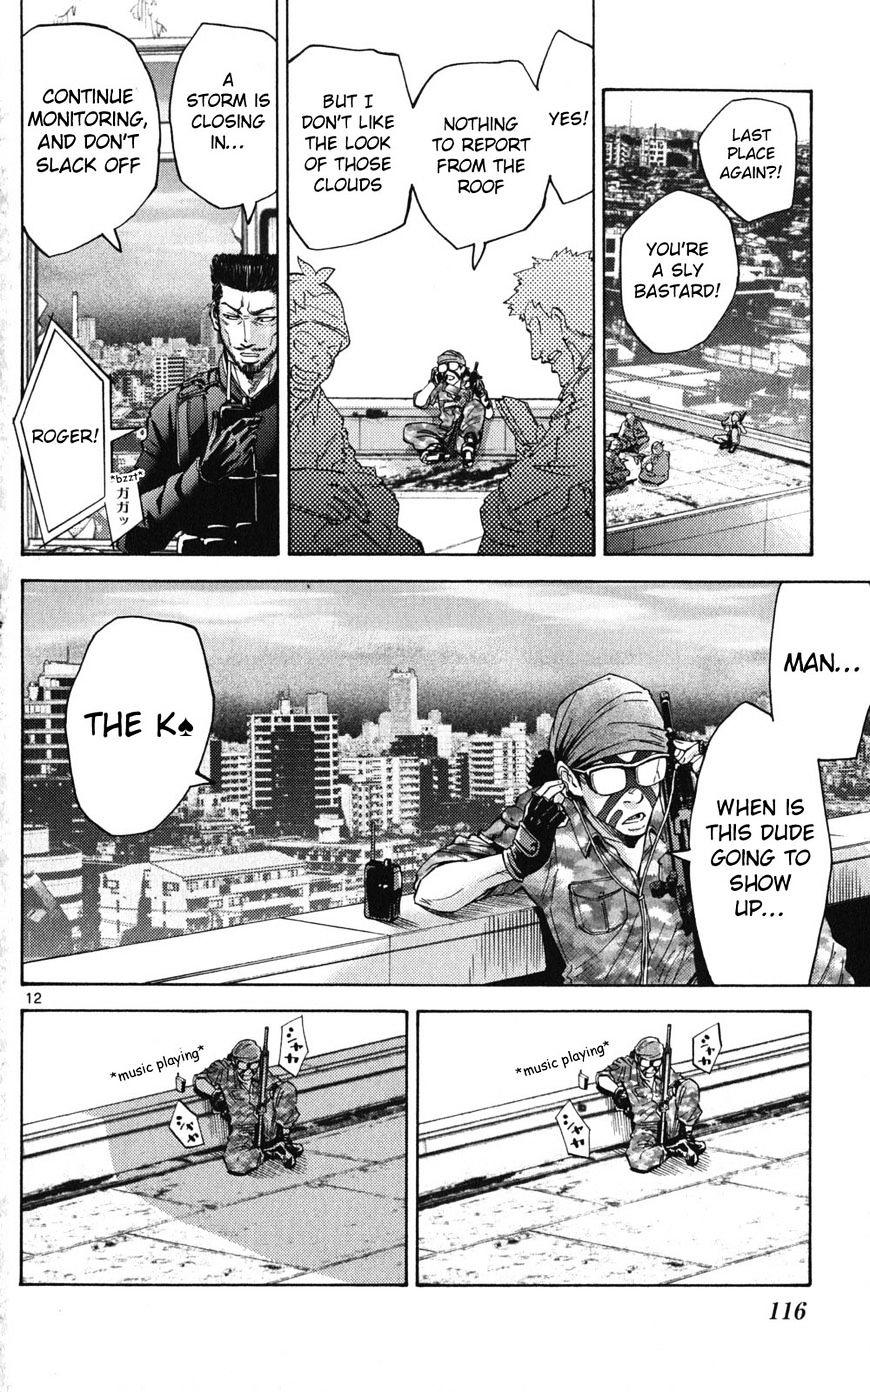 Imawa No Kuni No Alice Chapter 49.1 : Side Story 5 - King Of Spades (1) page 11 - Mangakakalot